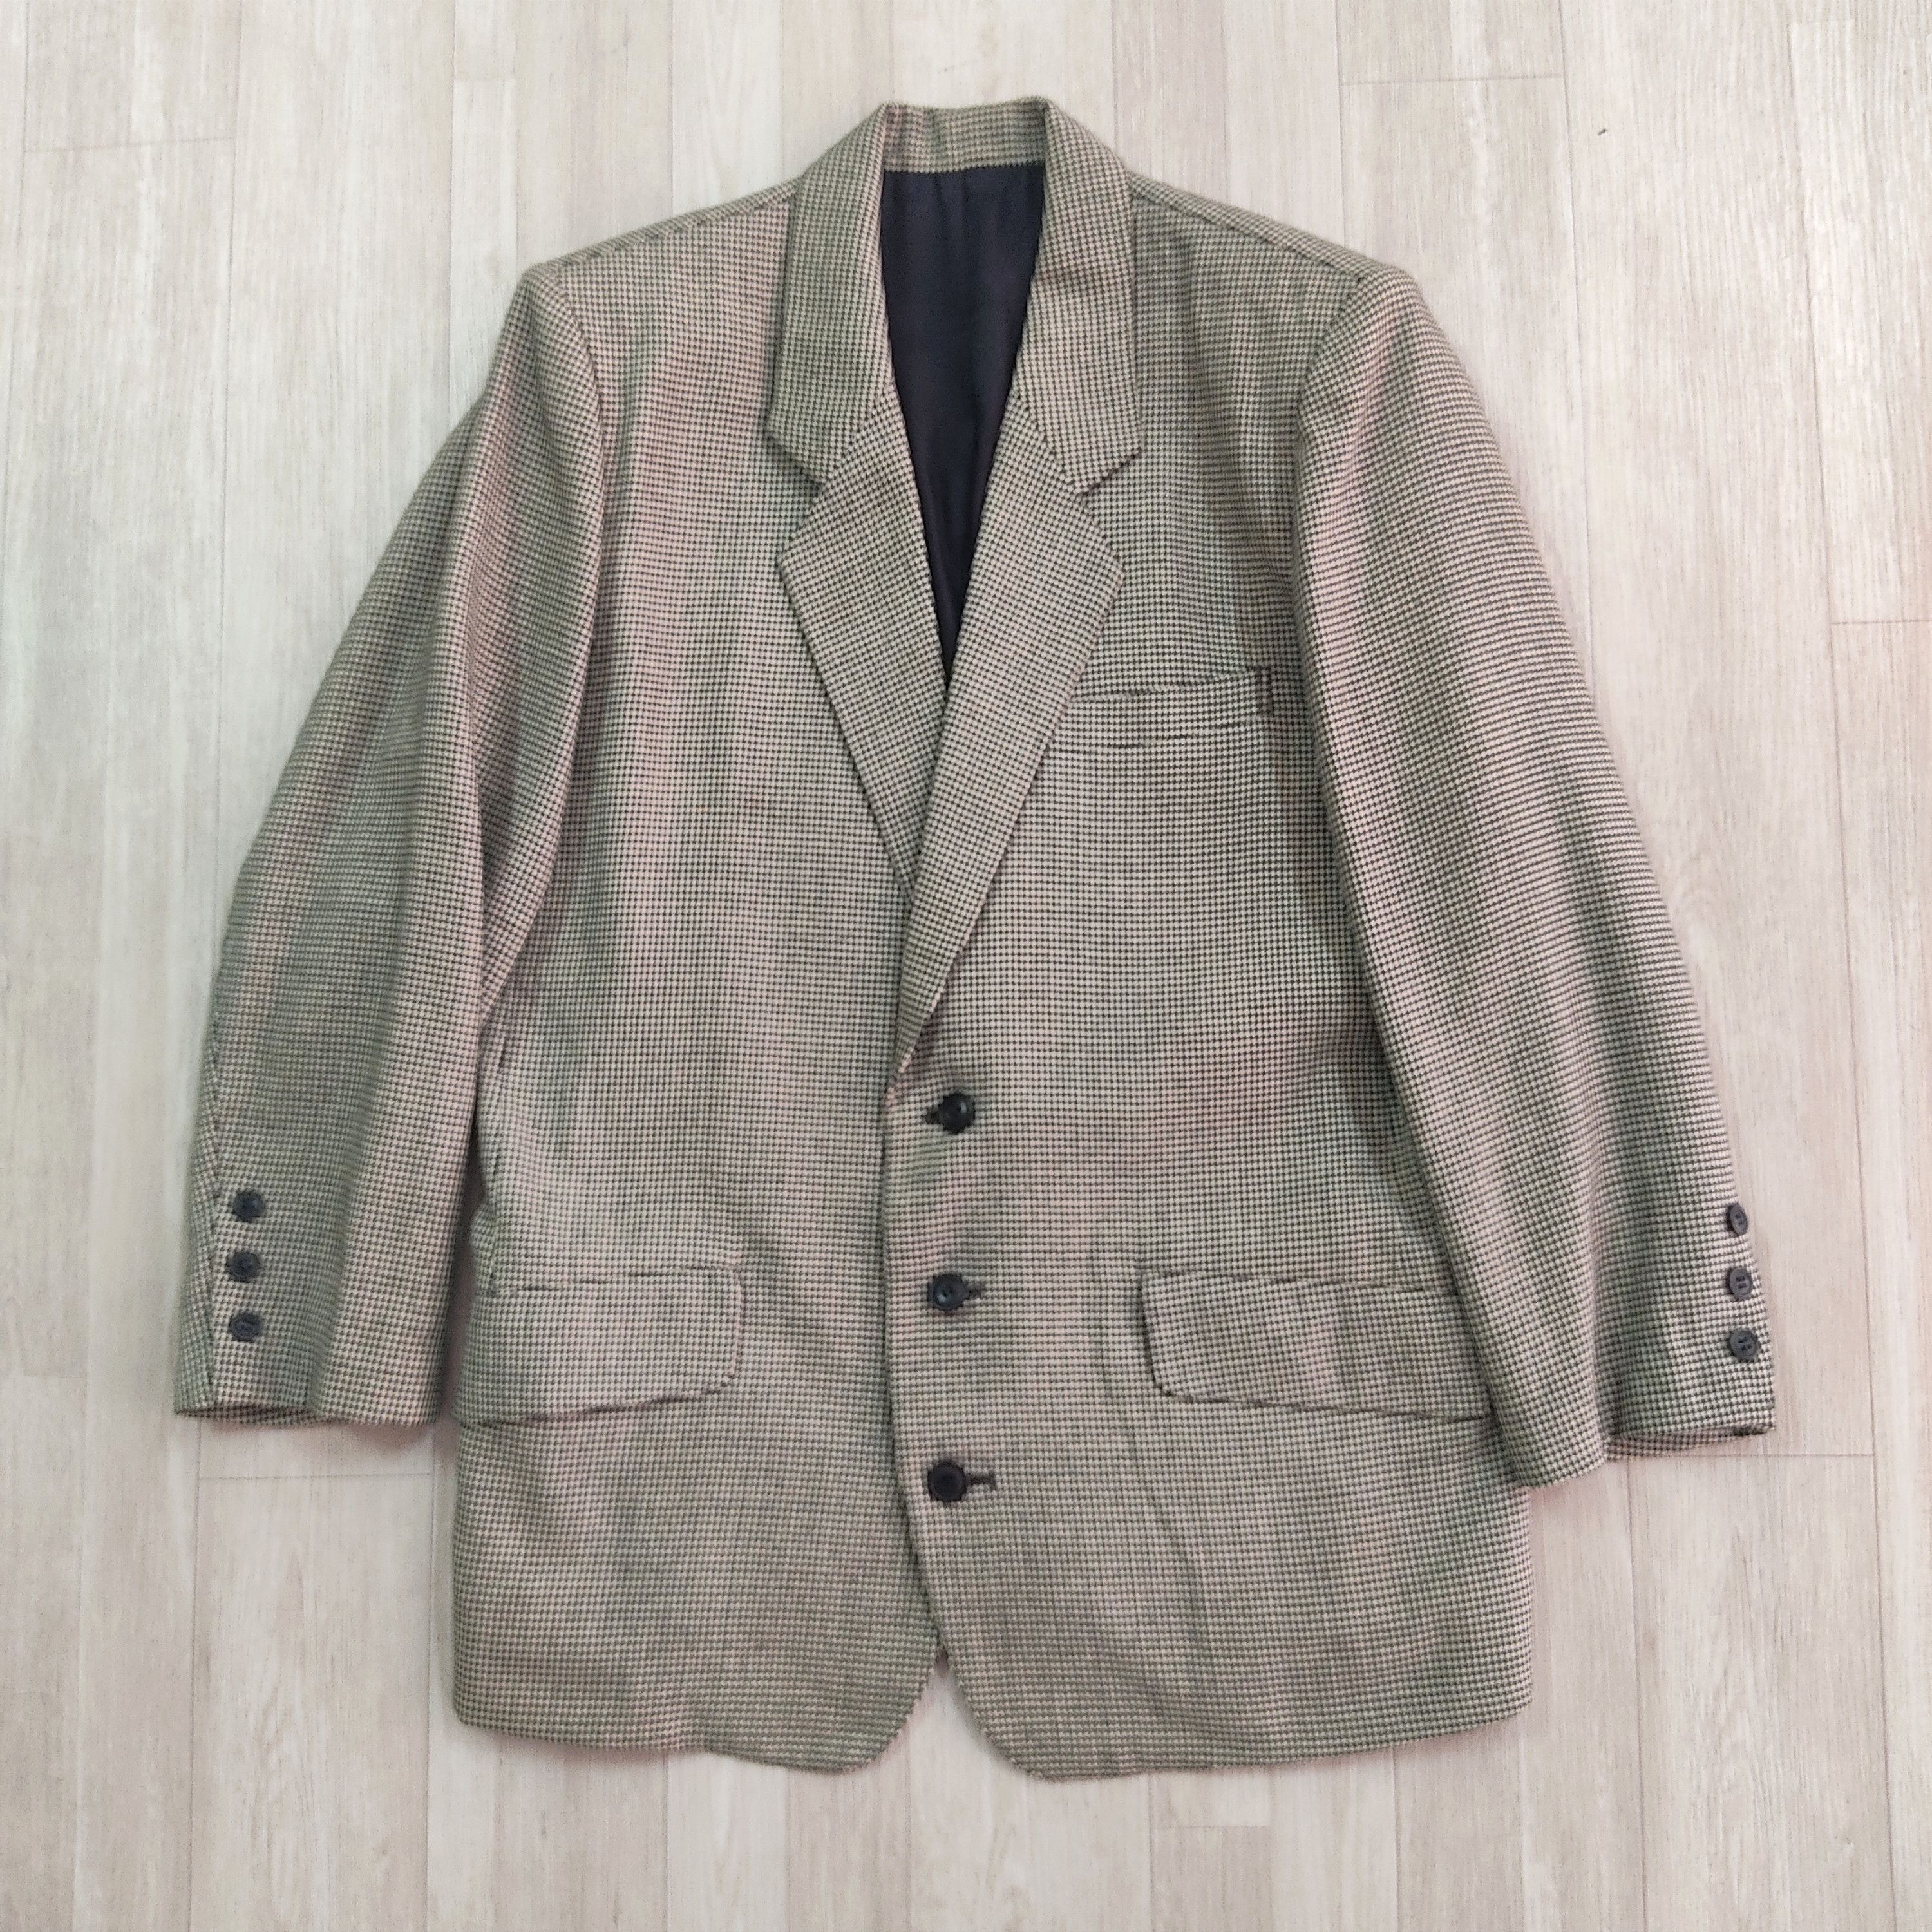 Very Rare - Vtg 80s ISSEY MIYAKE Plaid Tartan Blazer Coat Jacket - 3